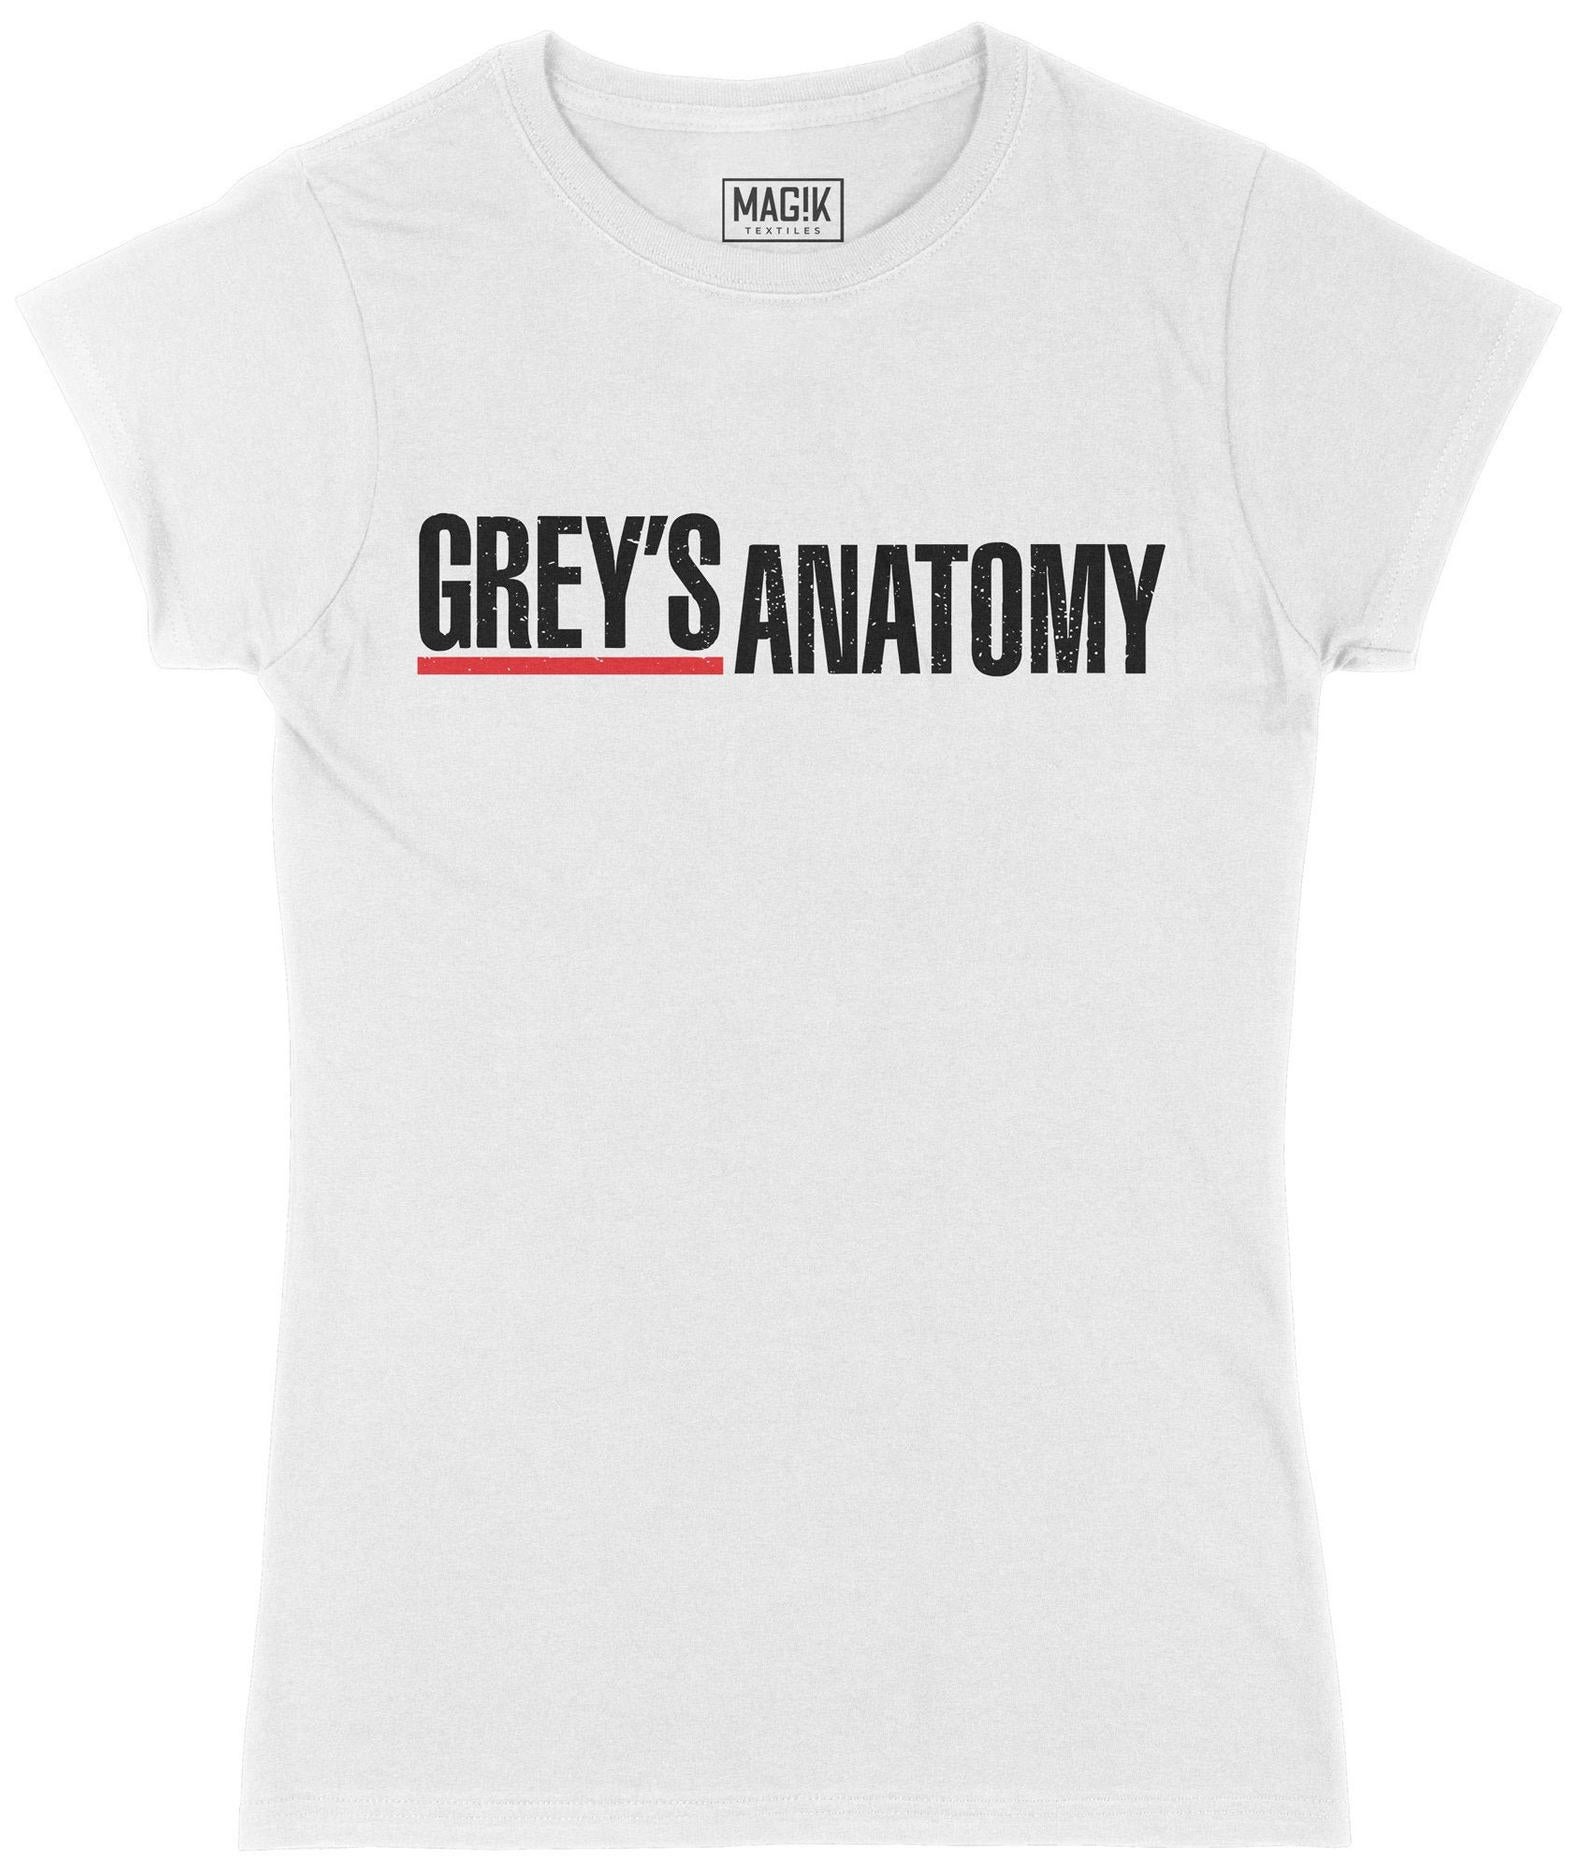 Magik Apparel Donna Grey's Anatomy T-shirt graphic cotton t-shirt